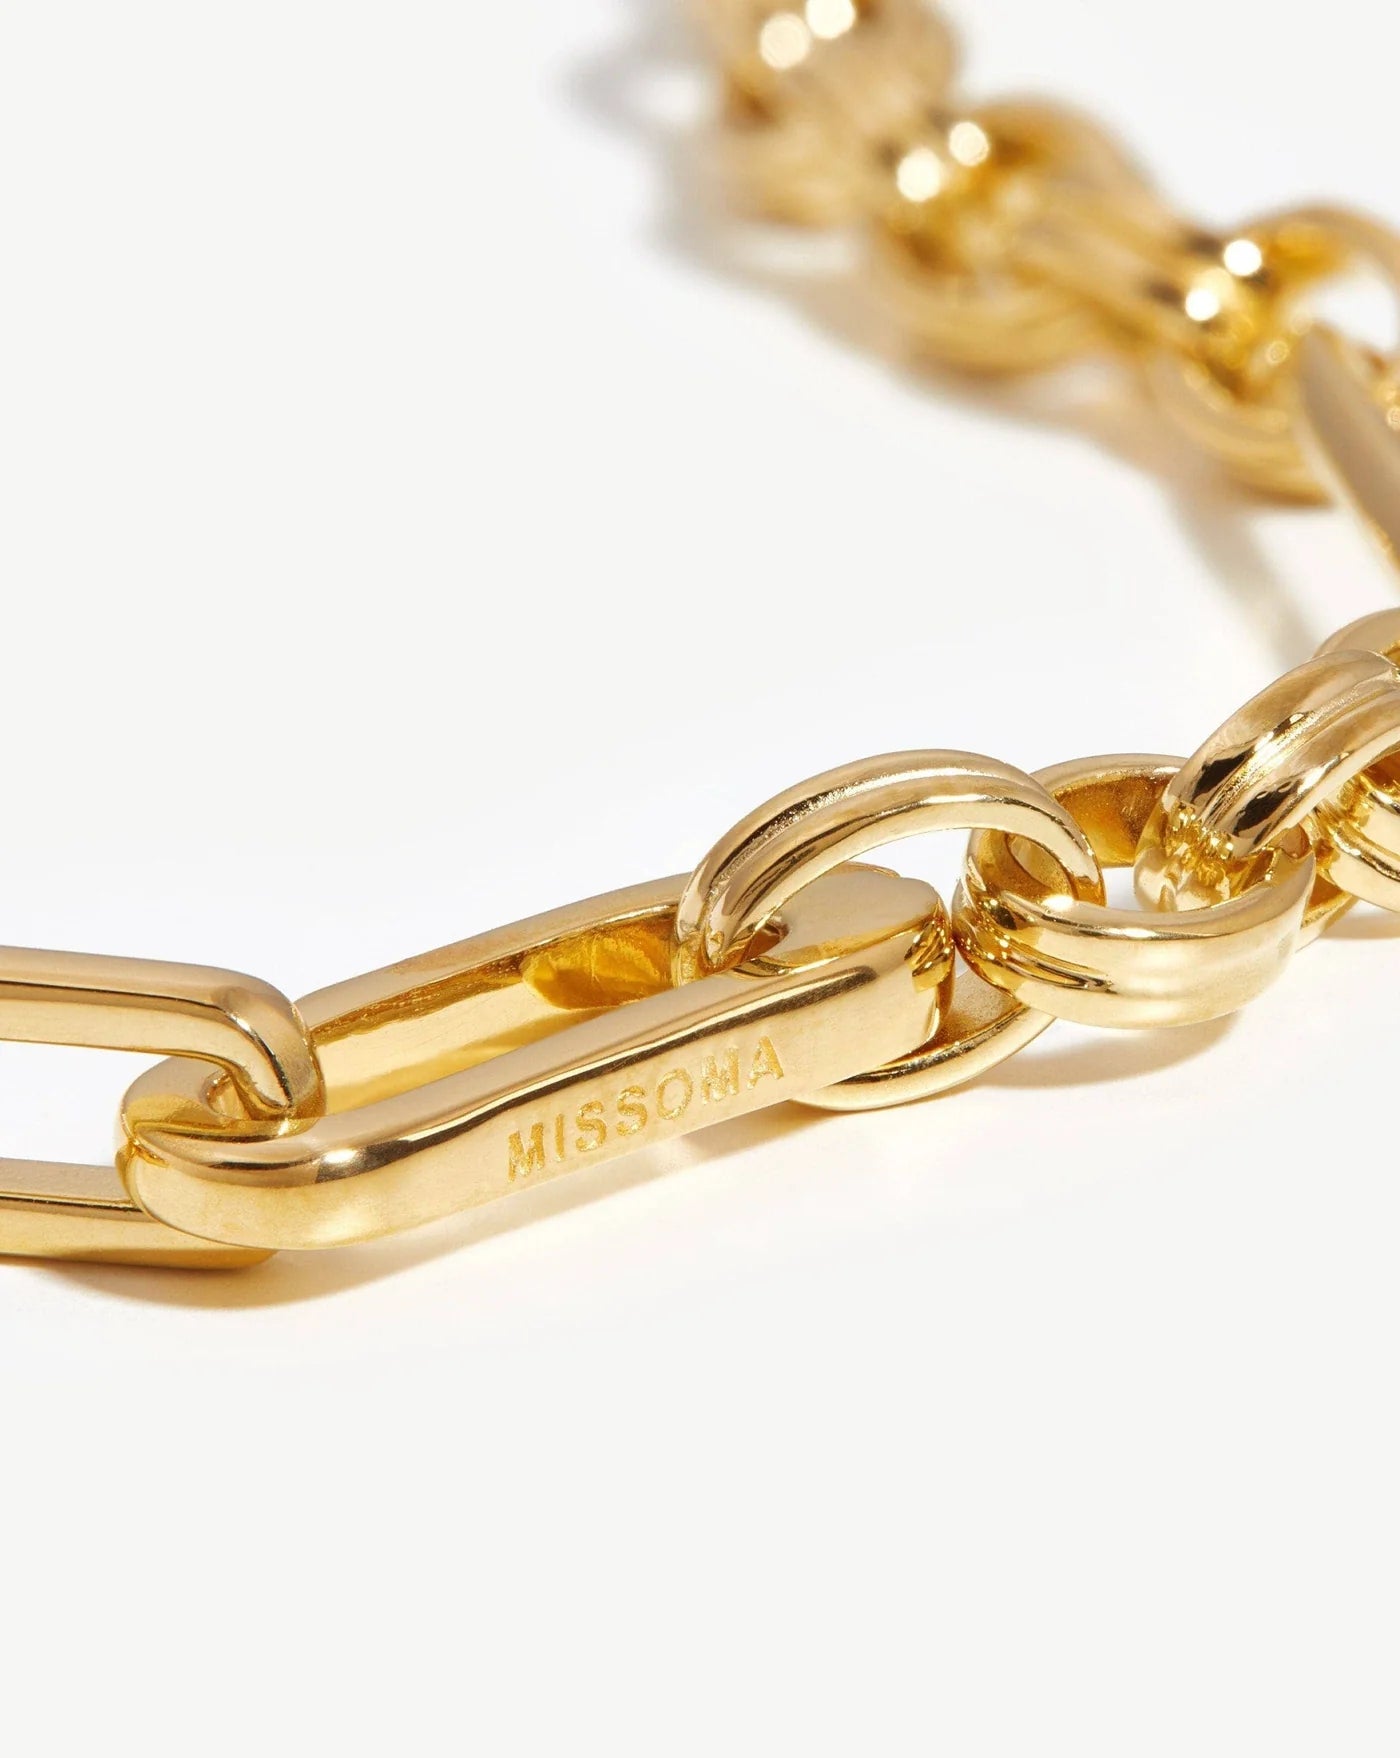 Axiom Chain Bracelet